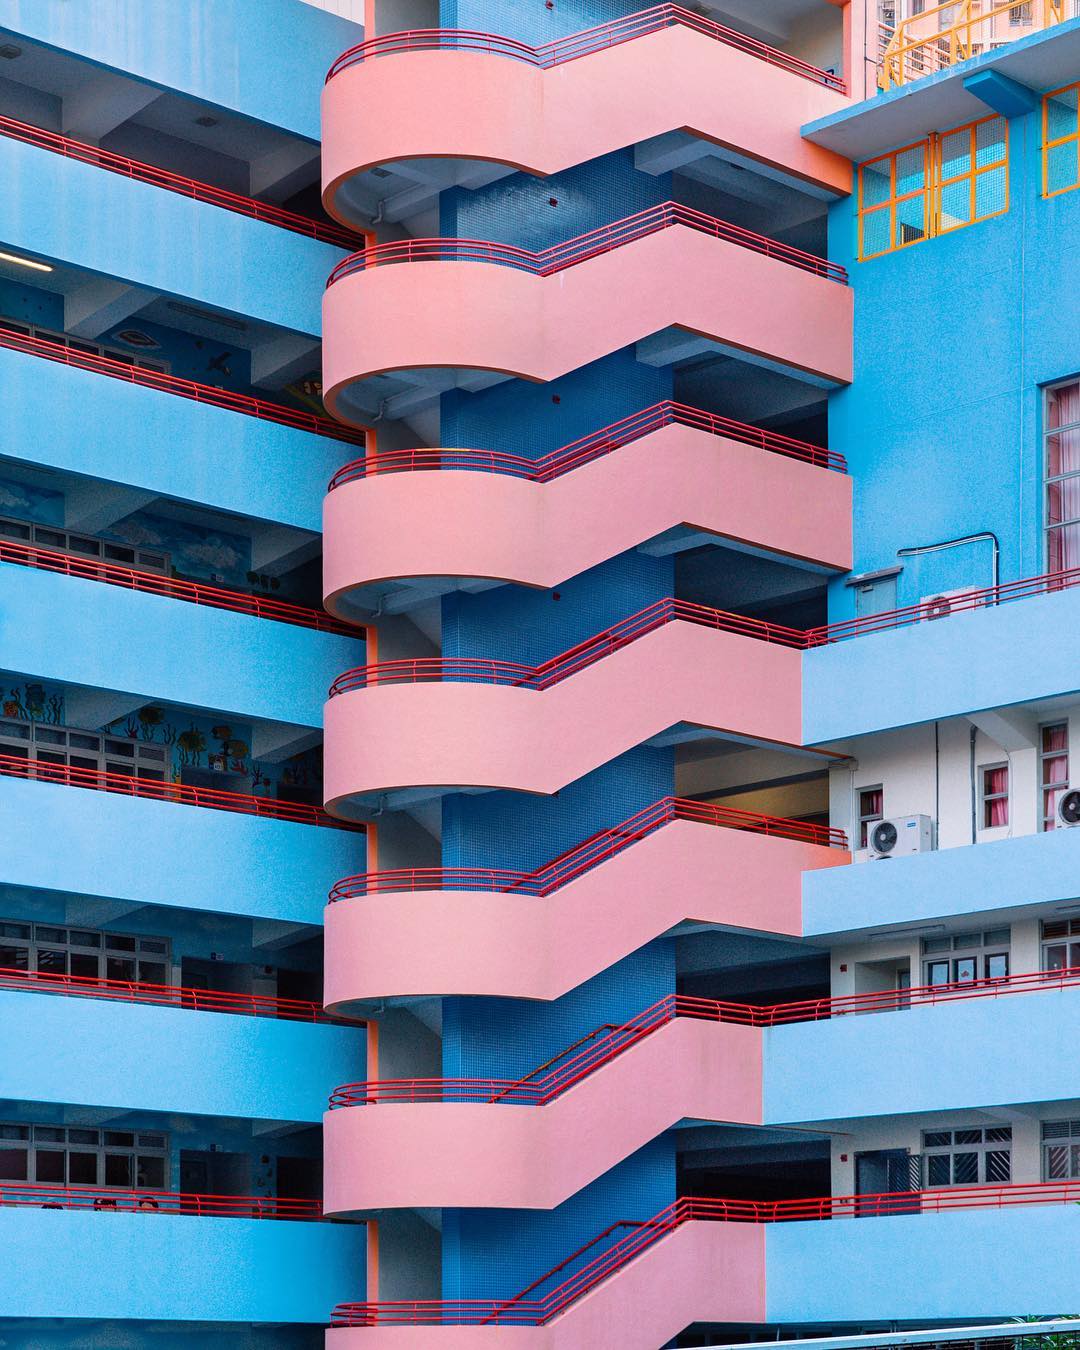 Архитектура и пейзажи Гонконга на снимках Виктора Ченга